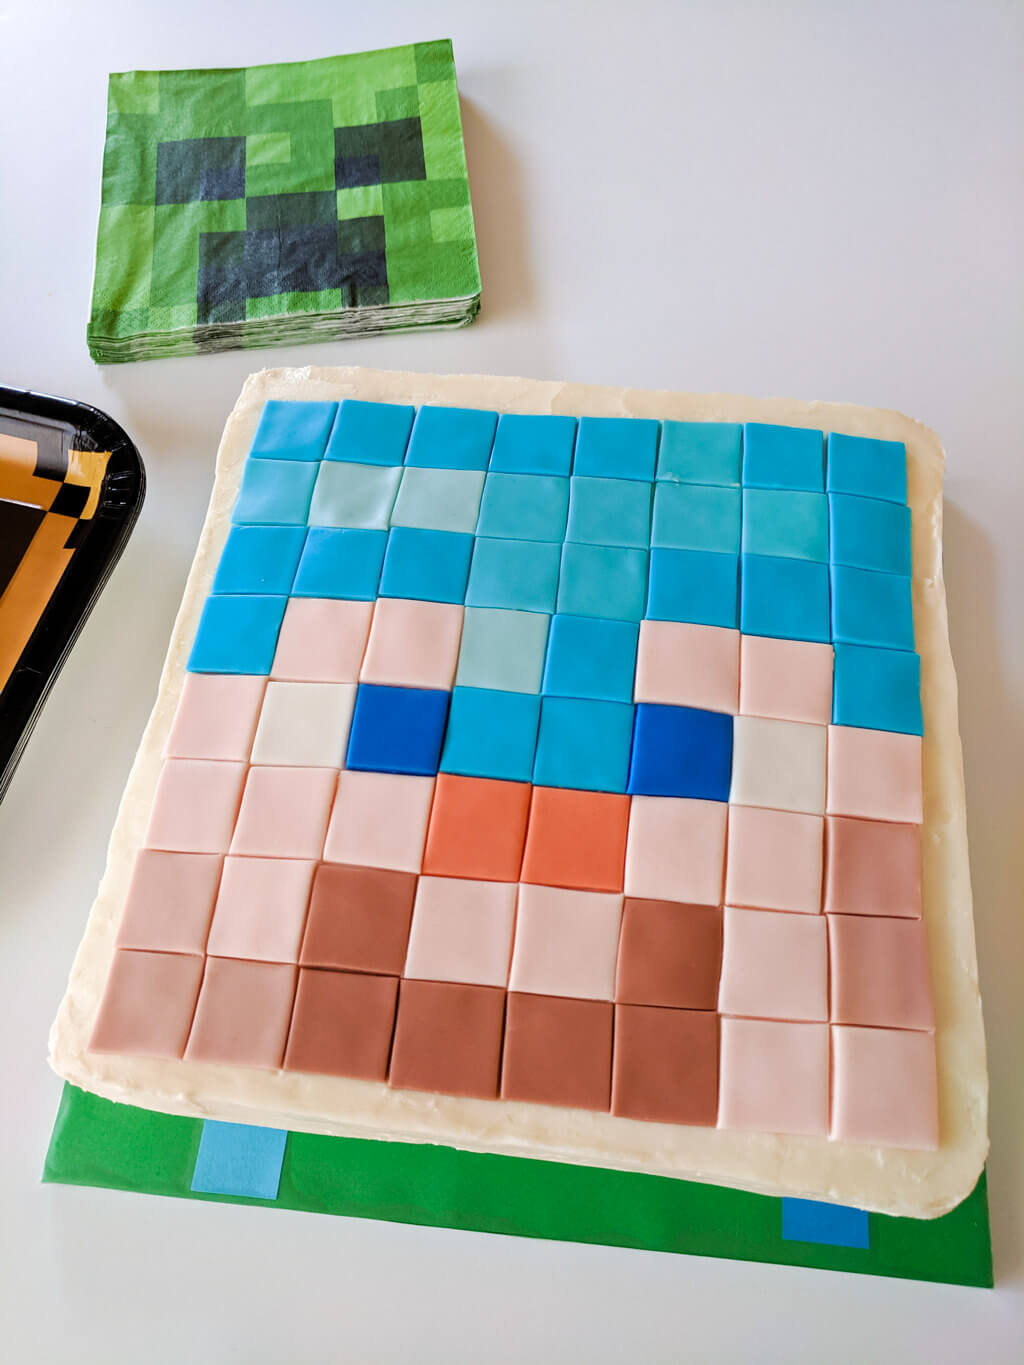 Small & Simple Cupcakes - Minecraft Cake @smallandsimpleconfections  #smallandsimpleconfections #autogramtags #fondantart #cakeoftheday  #boyscake #buttercreamcakes #kidscake #minecraftcake #cakesofinsta  #vanillabuttercream #cakefun #cakeofinstagram ...